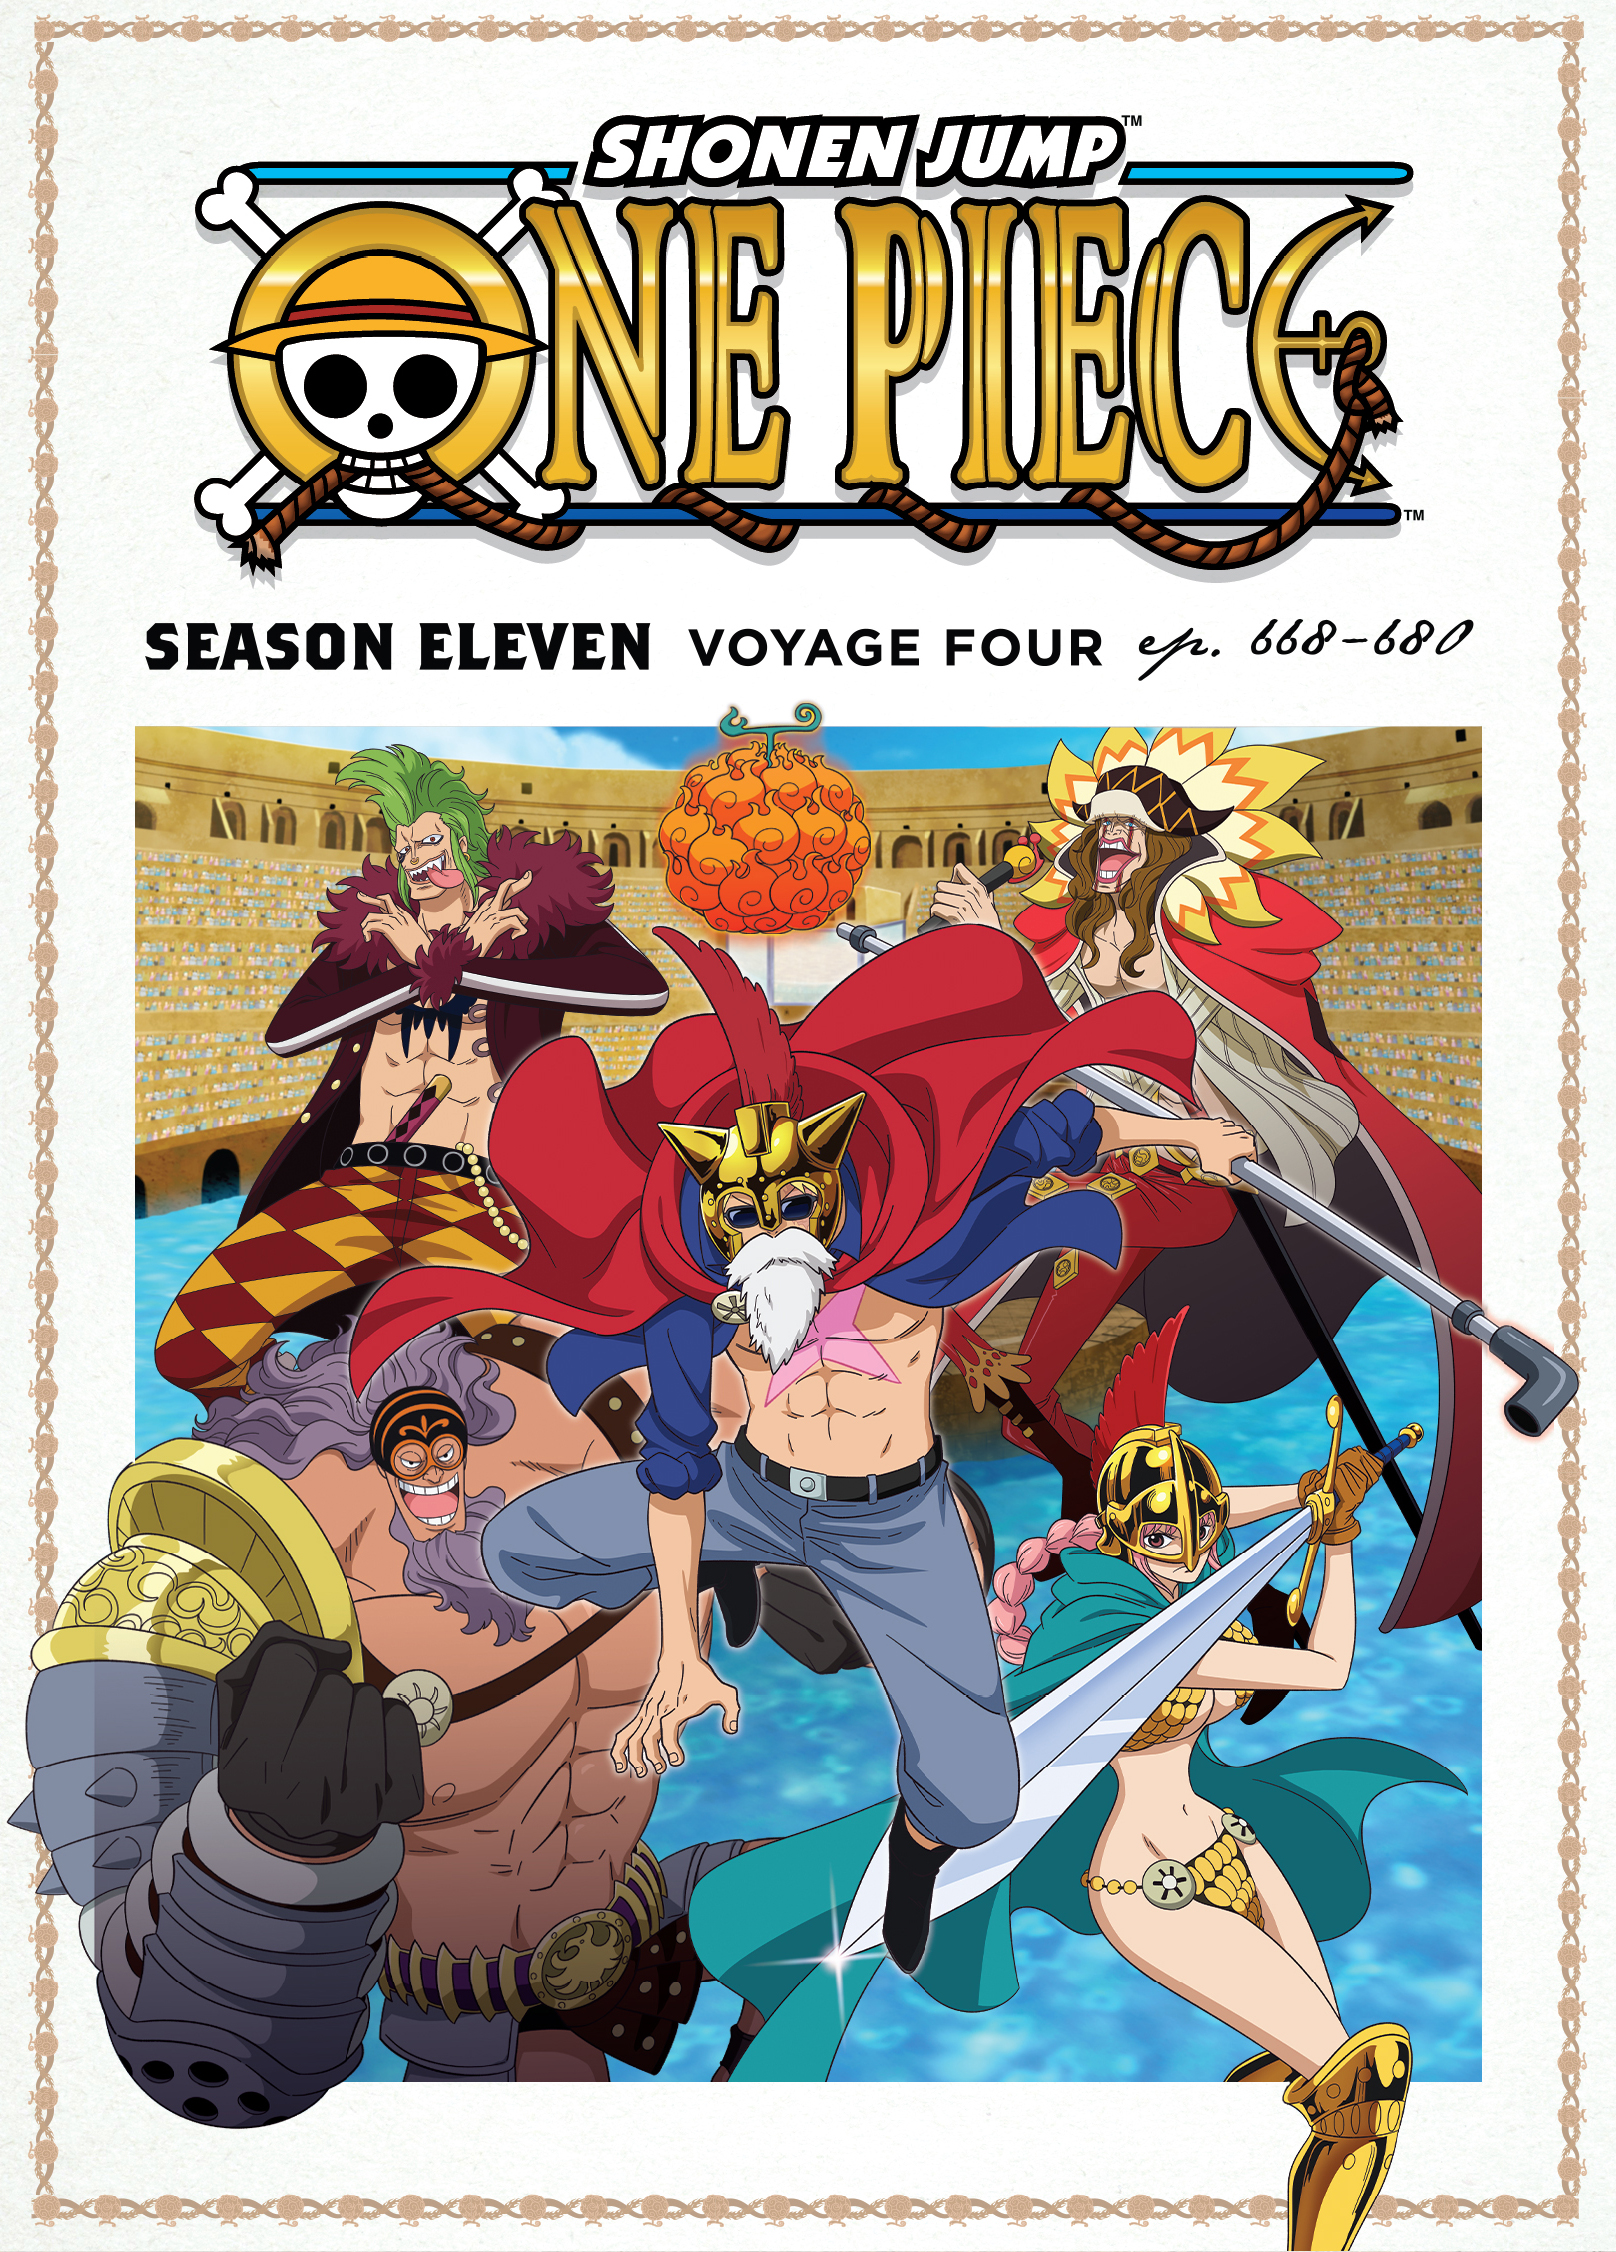 One Piece Season 14, Voyage 11 (Eps. 1013-1024) Streams on